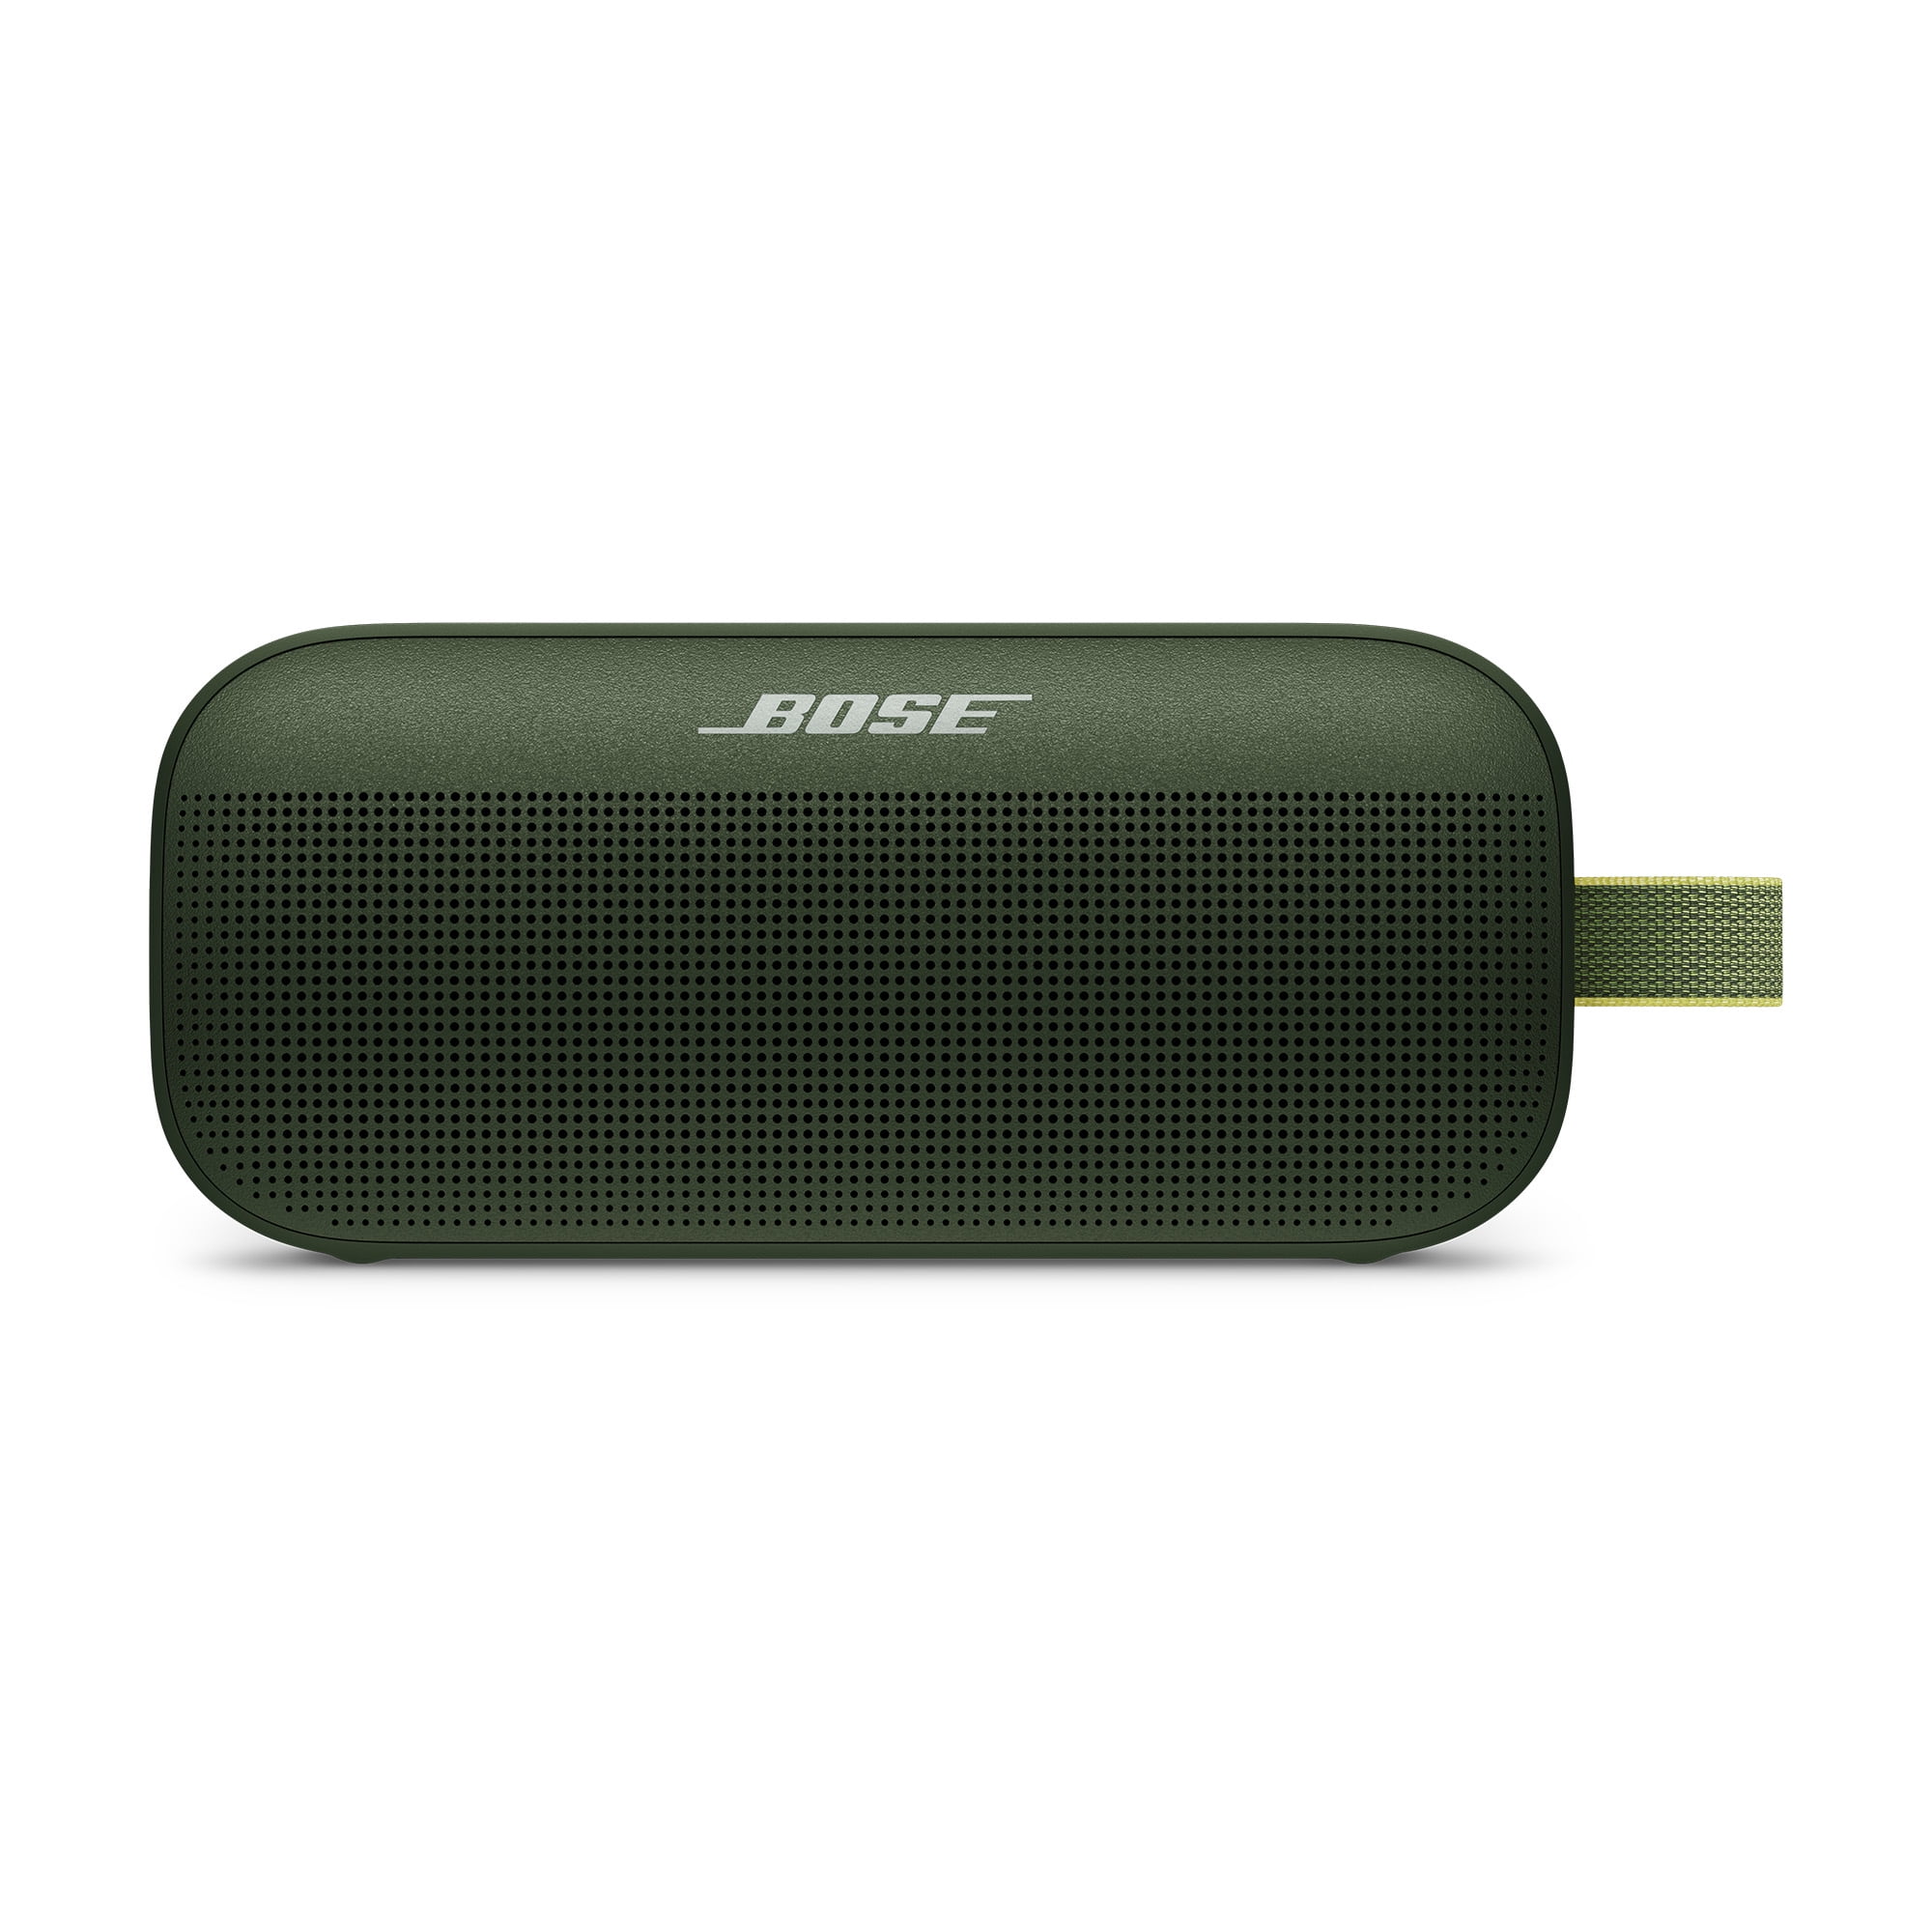 SoundLink Bluetooth Flex White Speaker, Wireless Bose Waterproof Portable